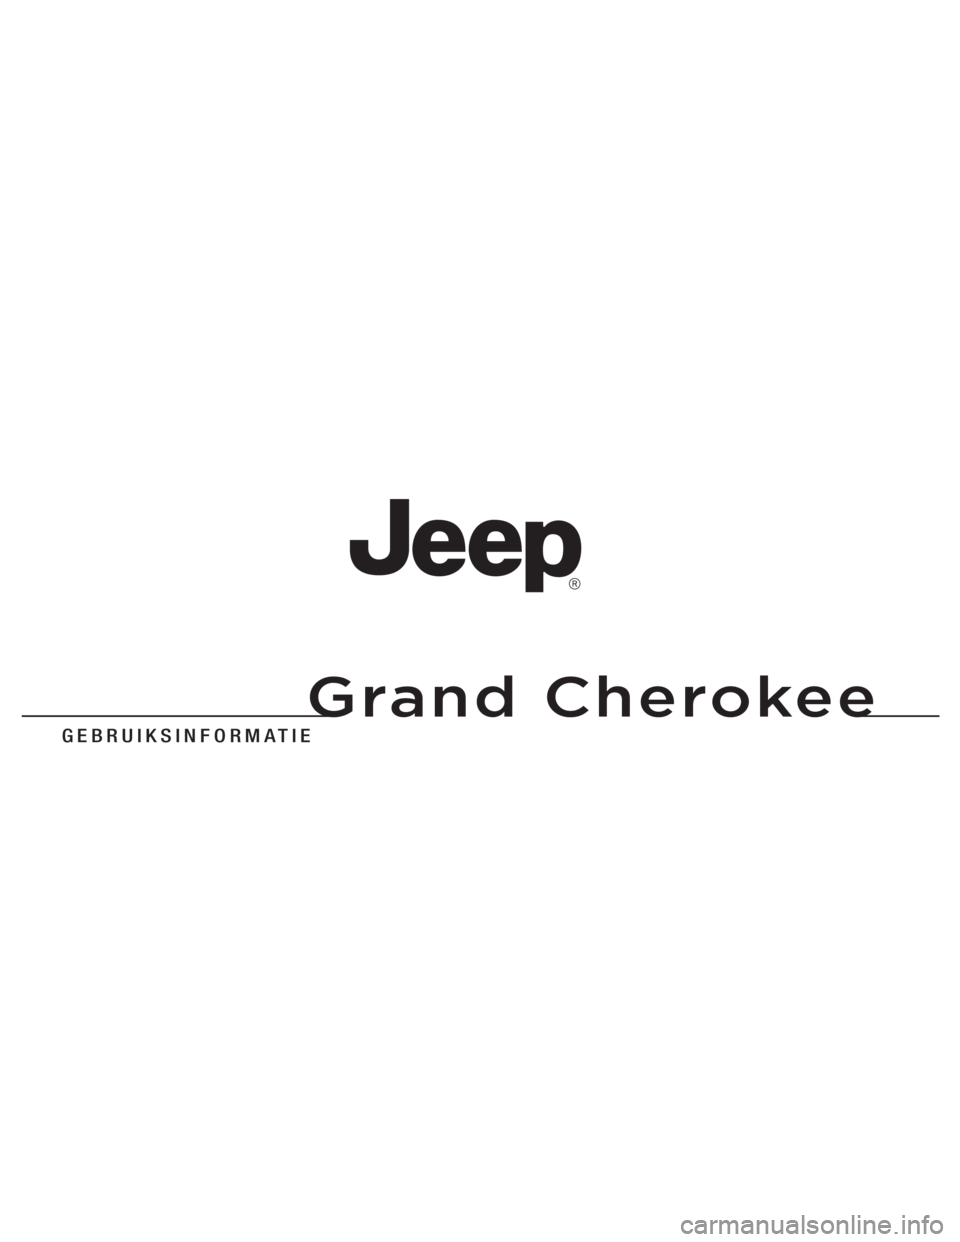 JEEP GRAND CHEROKEE 2014  Instructieboek (in Dutch) 
Grand Cherokee
G E B R U I K S I N \f O R M A \b I E
G r a n d   C h e r o k e e
11WK741-126-DUT-AA
                  \k        Gedruk\f in E\kur\bpa 11 